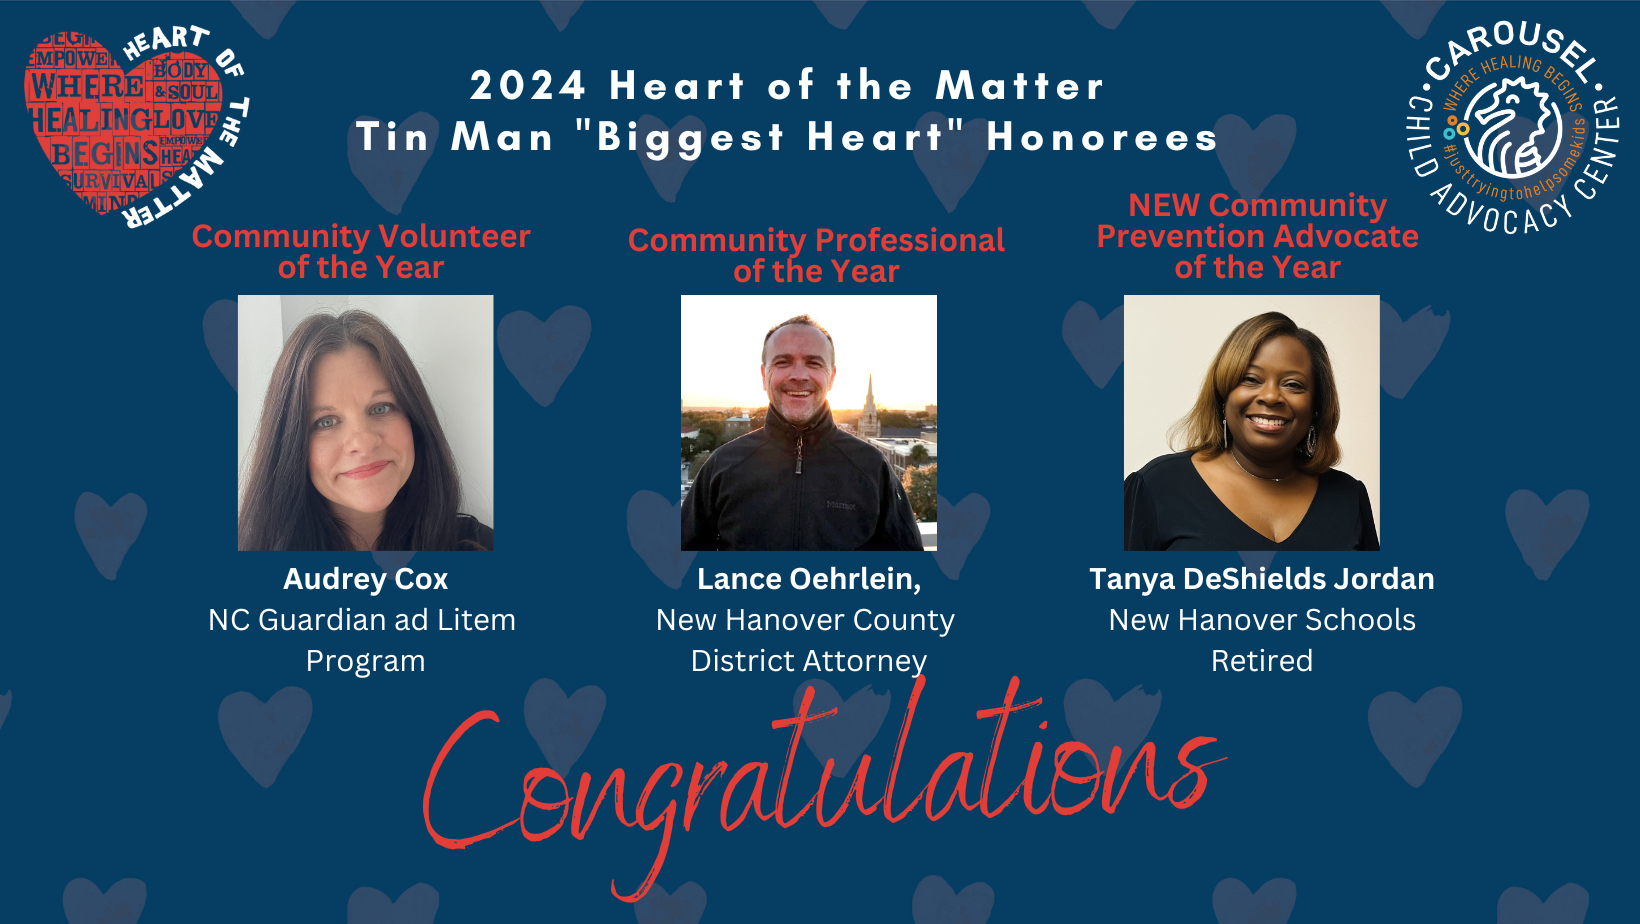 2024 Tin "Biggest Heart" Man Honorees